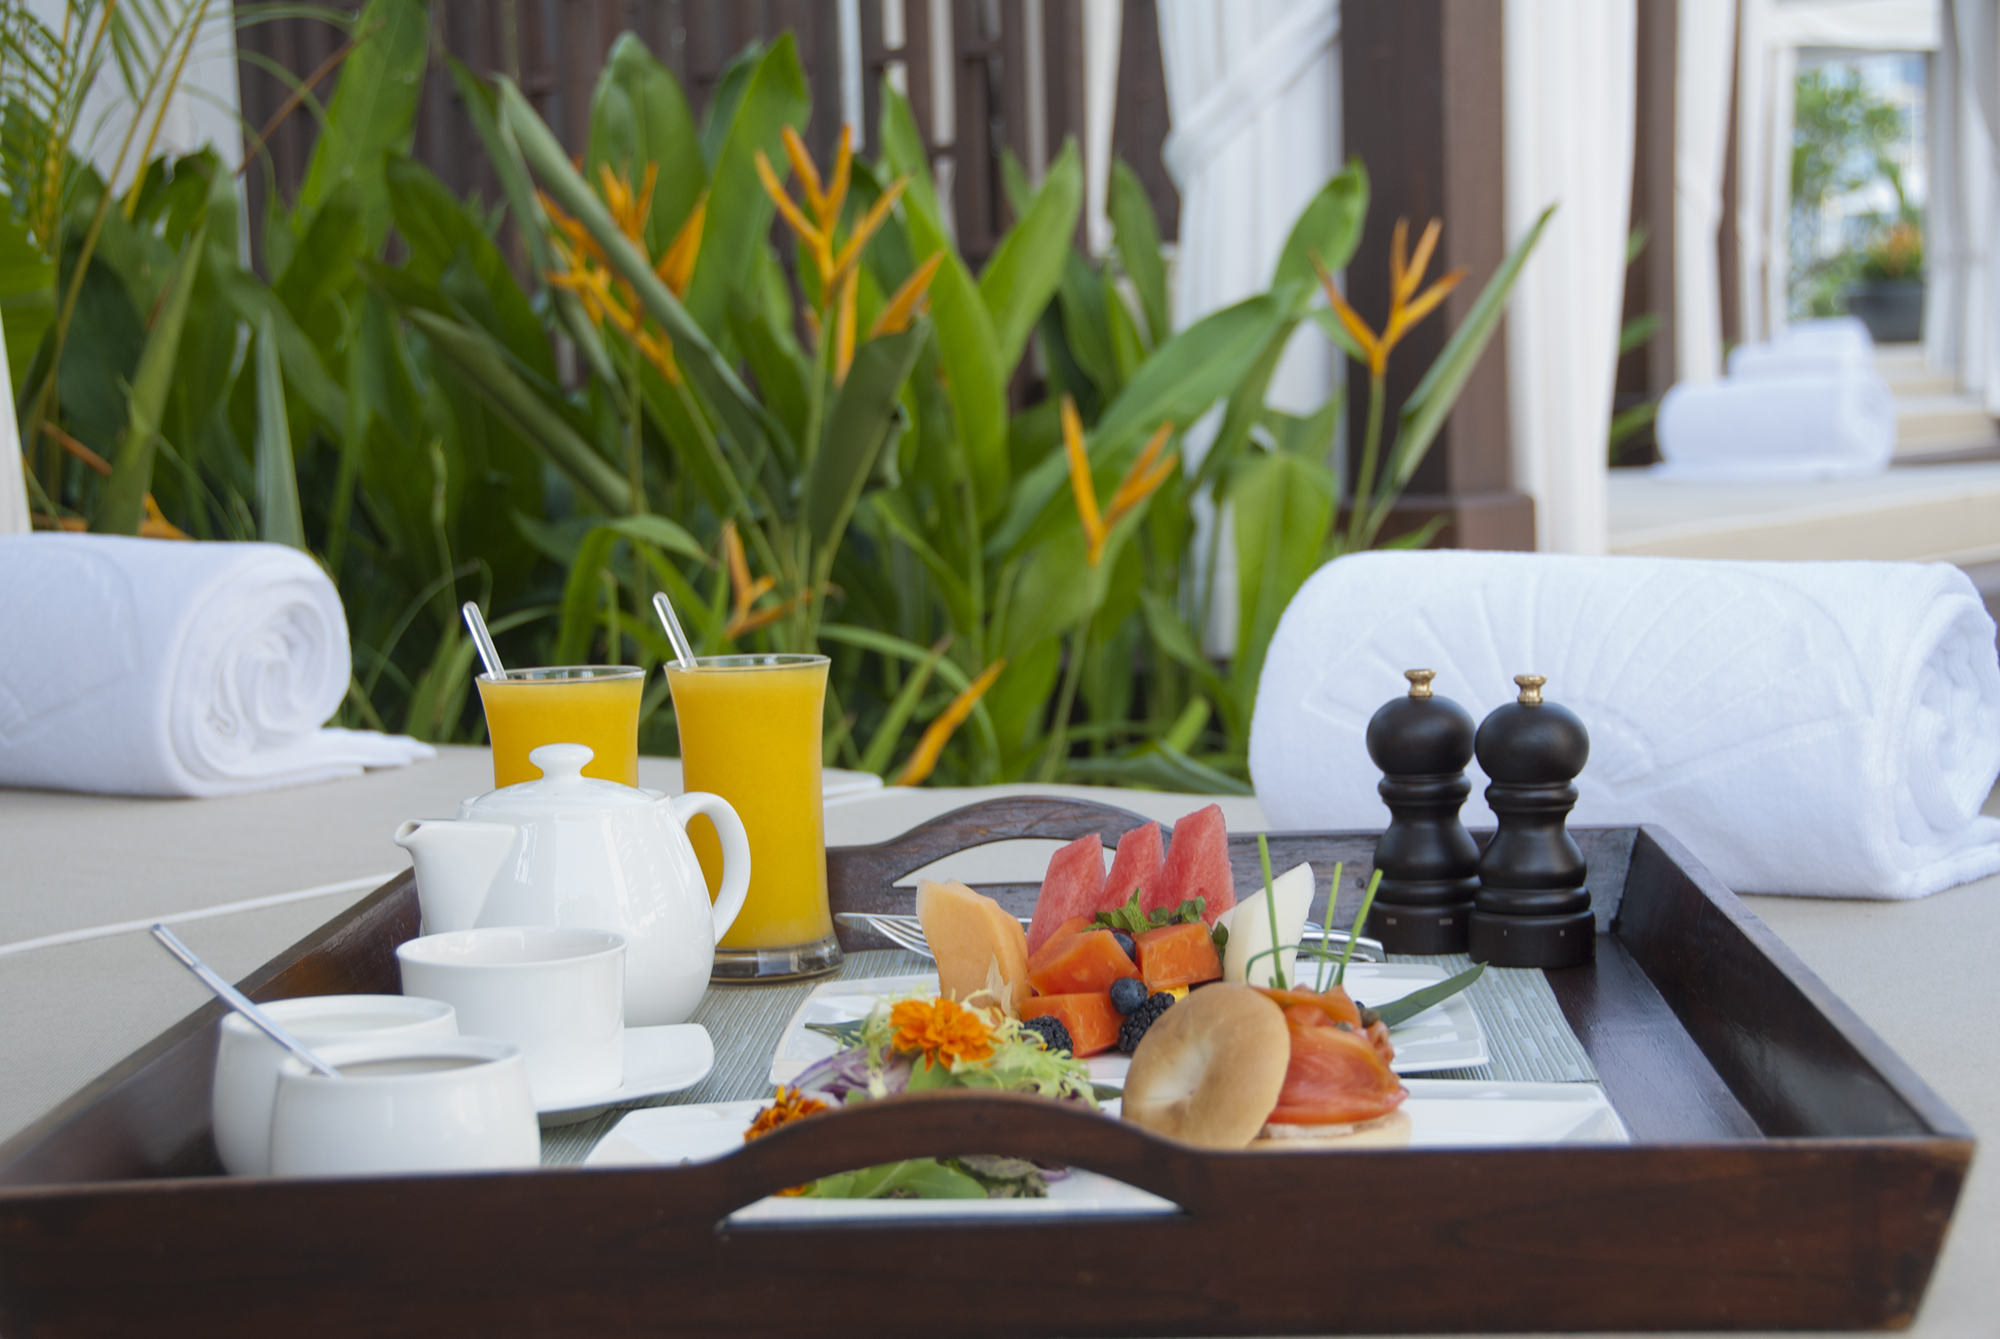 Breakfast Poolside. The Mandarin Oriental Hotel Singapore.